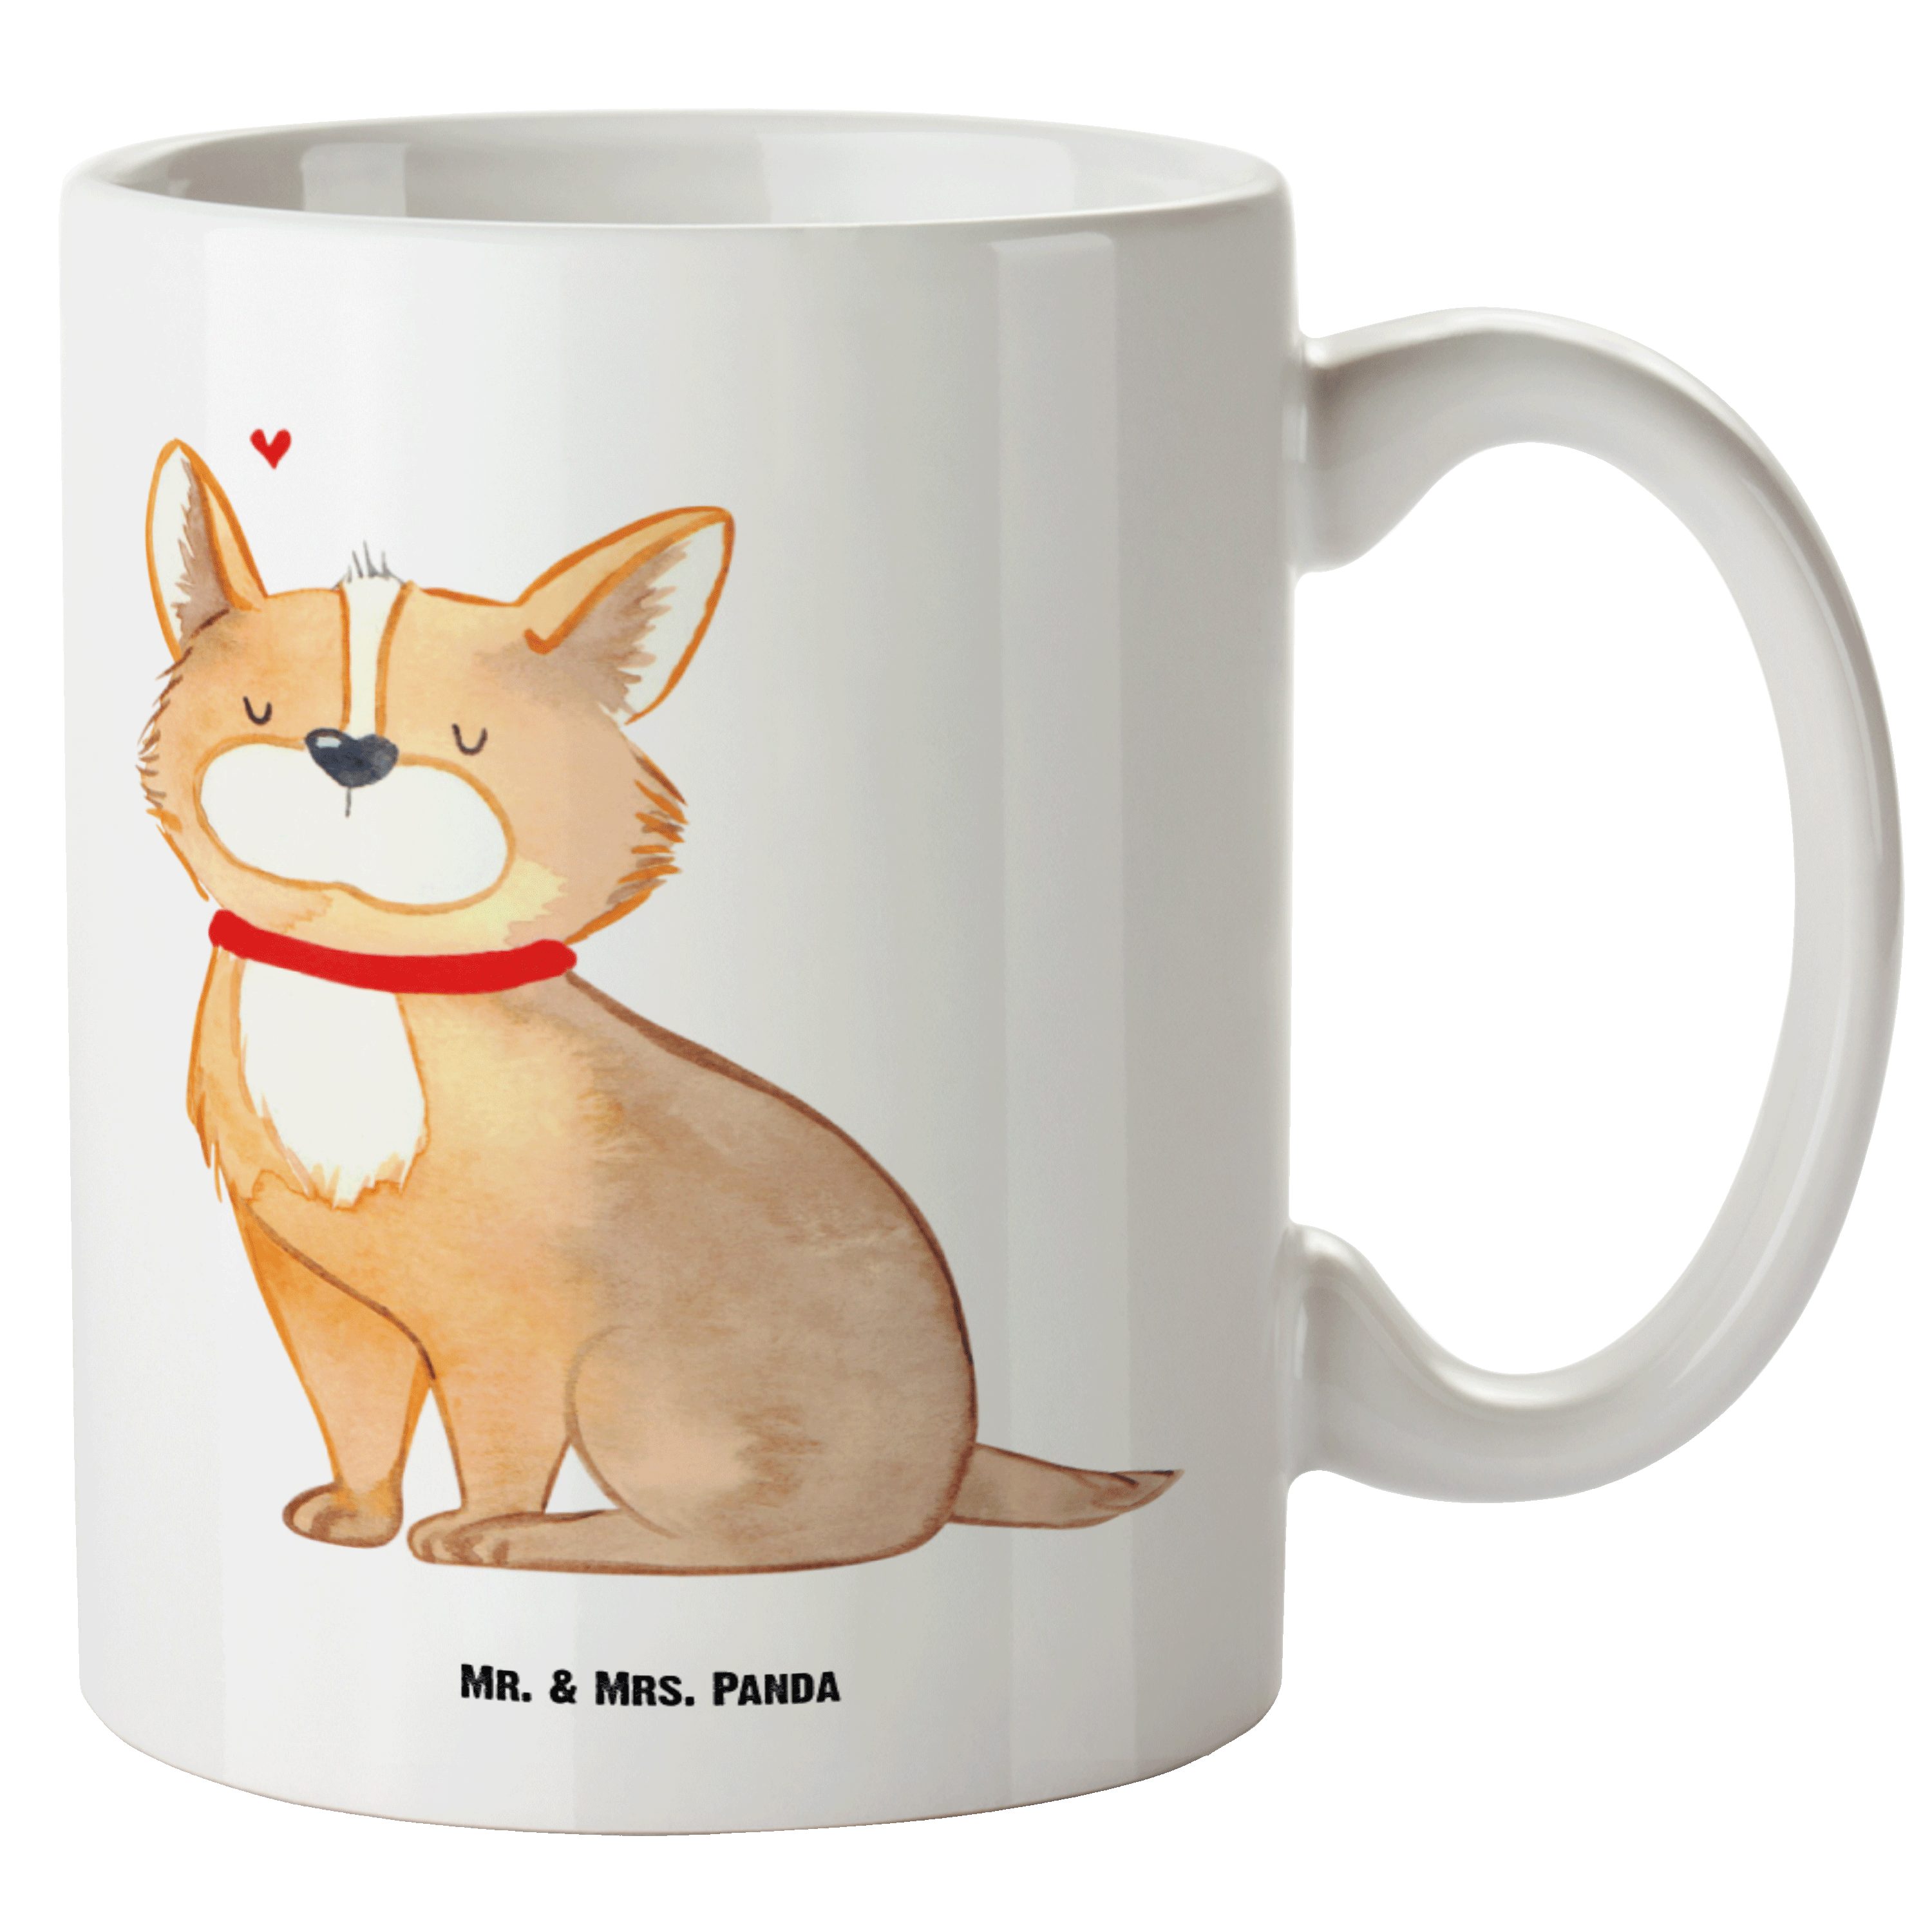 Mr. & Mrs. Panda Tasse Hundeglück - Weiß - Geschenk, Jumbo Tasse, Große Tasse, Hundemotiv, H, XL Tasse Keramik